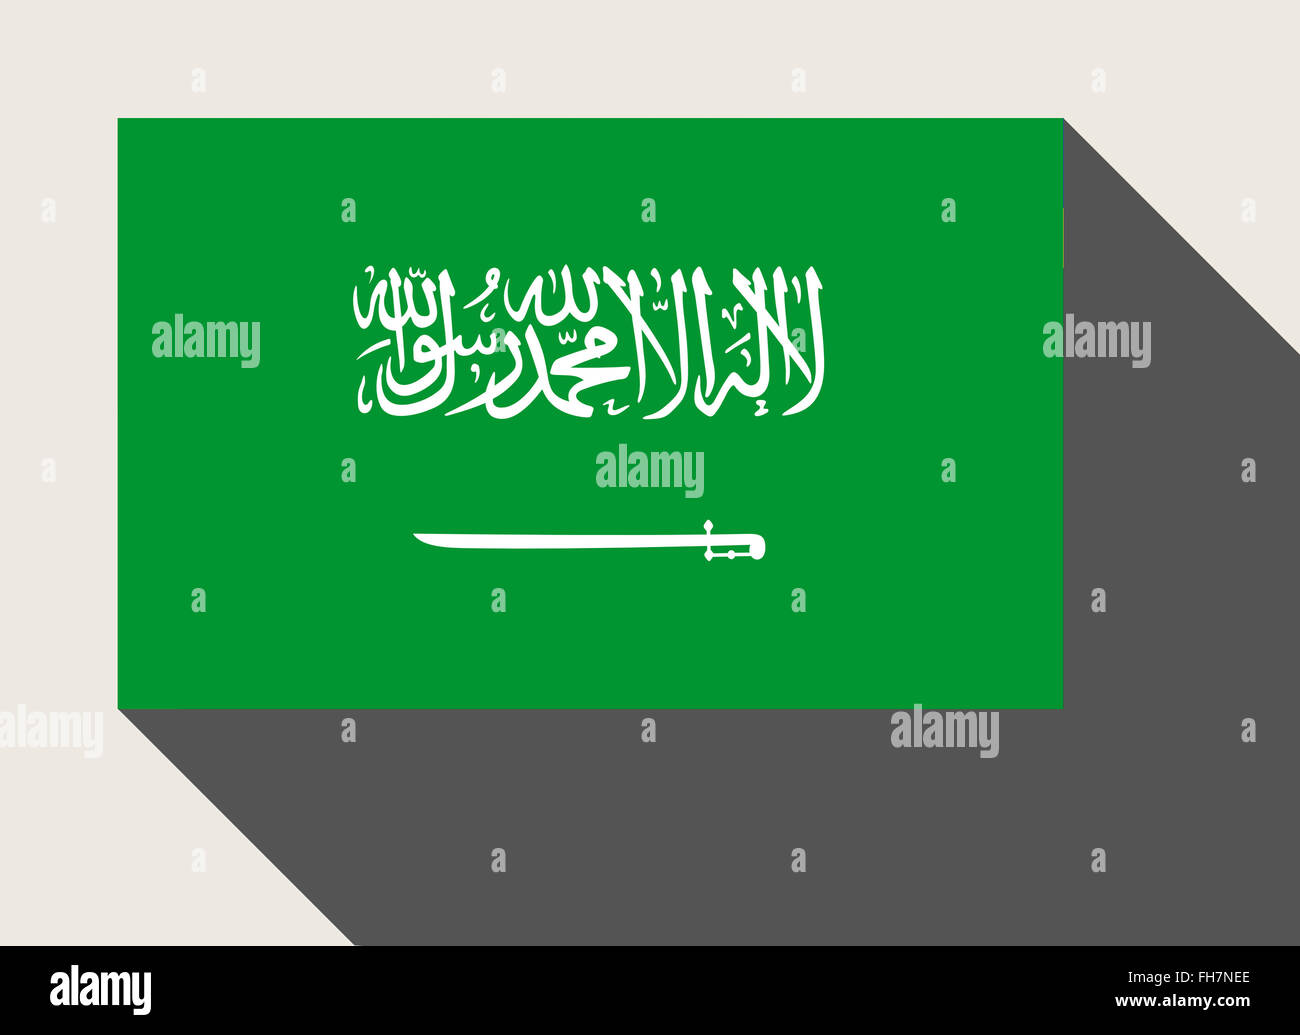 Saudi Arabia flag in flat web design style. Stock Photo